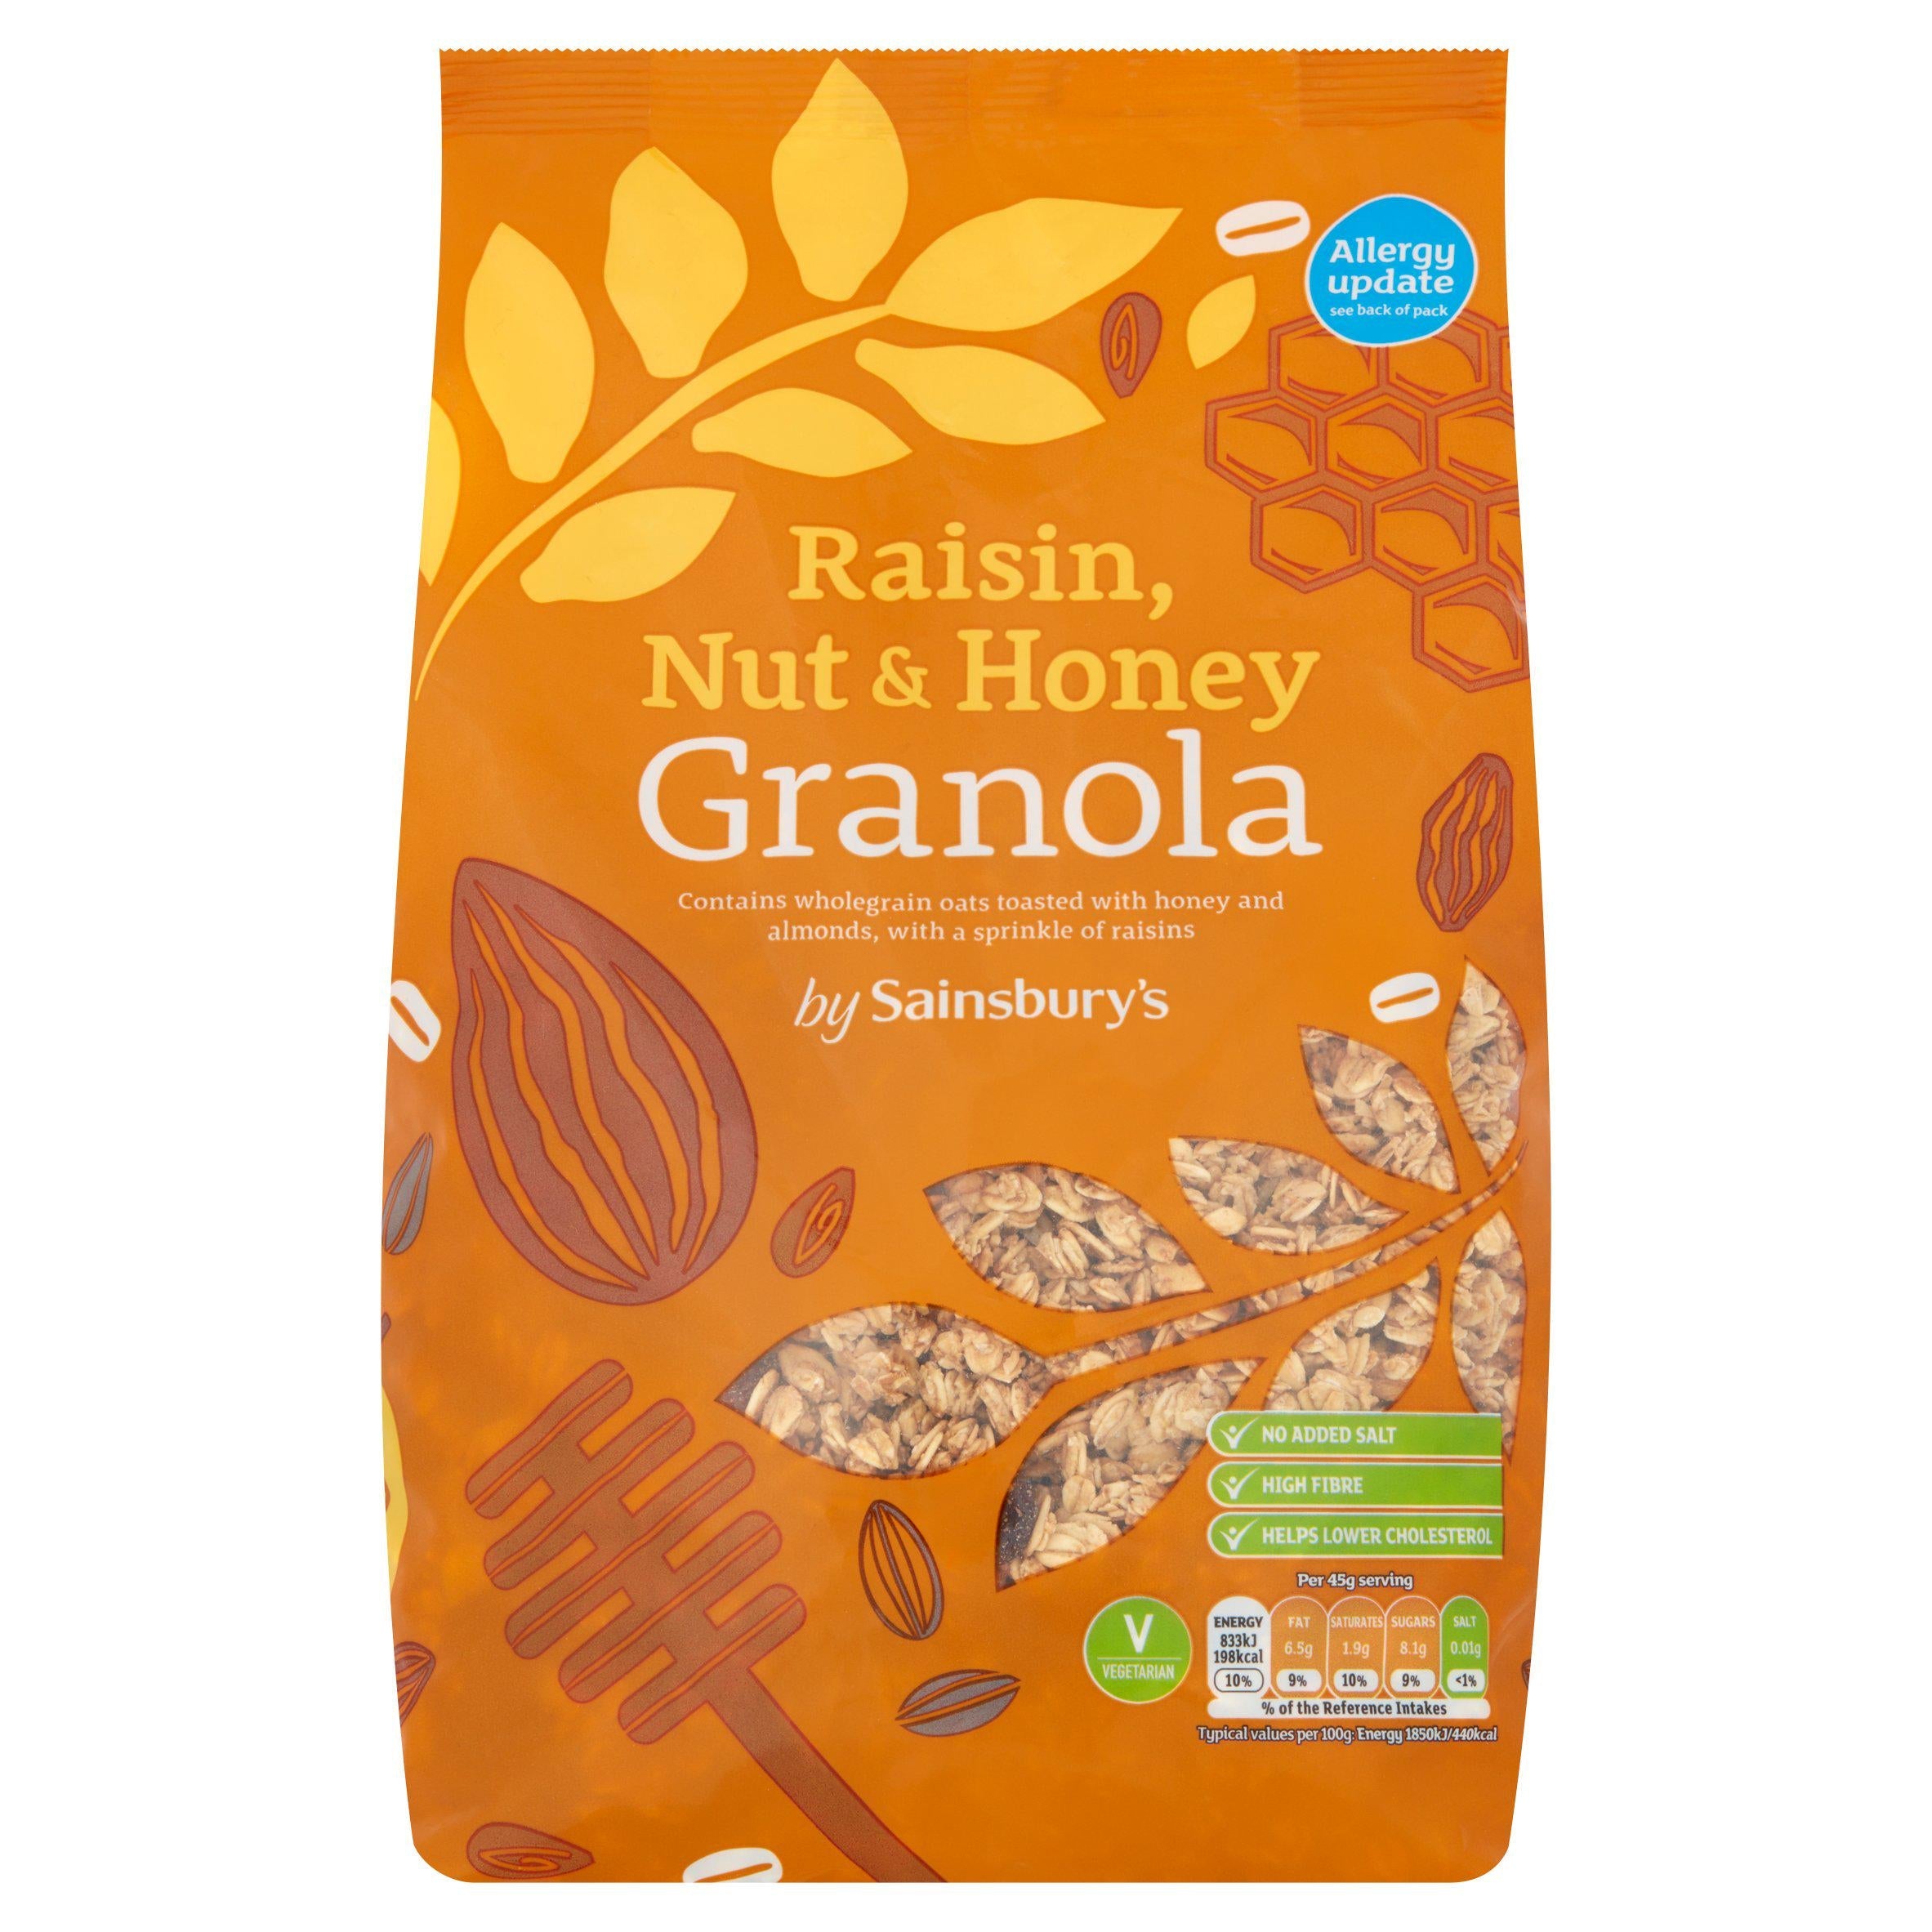 WSO - Sainsbury's Granola, Raisin, Nut & Honey 1kg 1x8